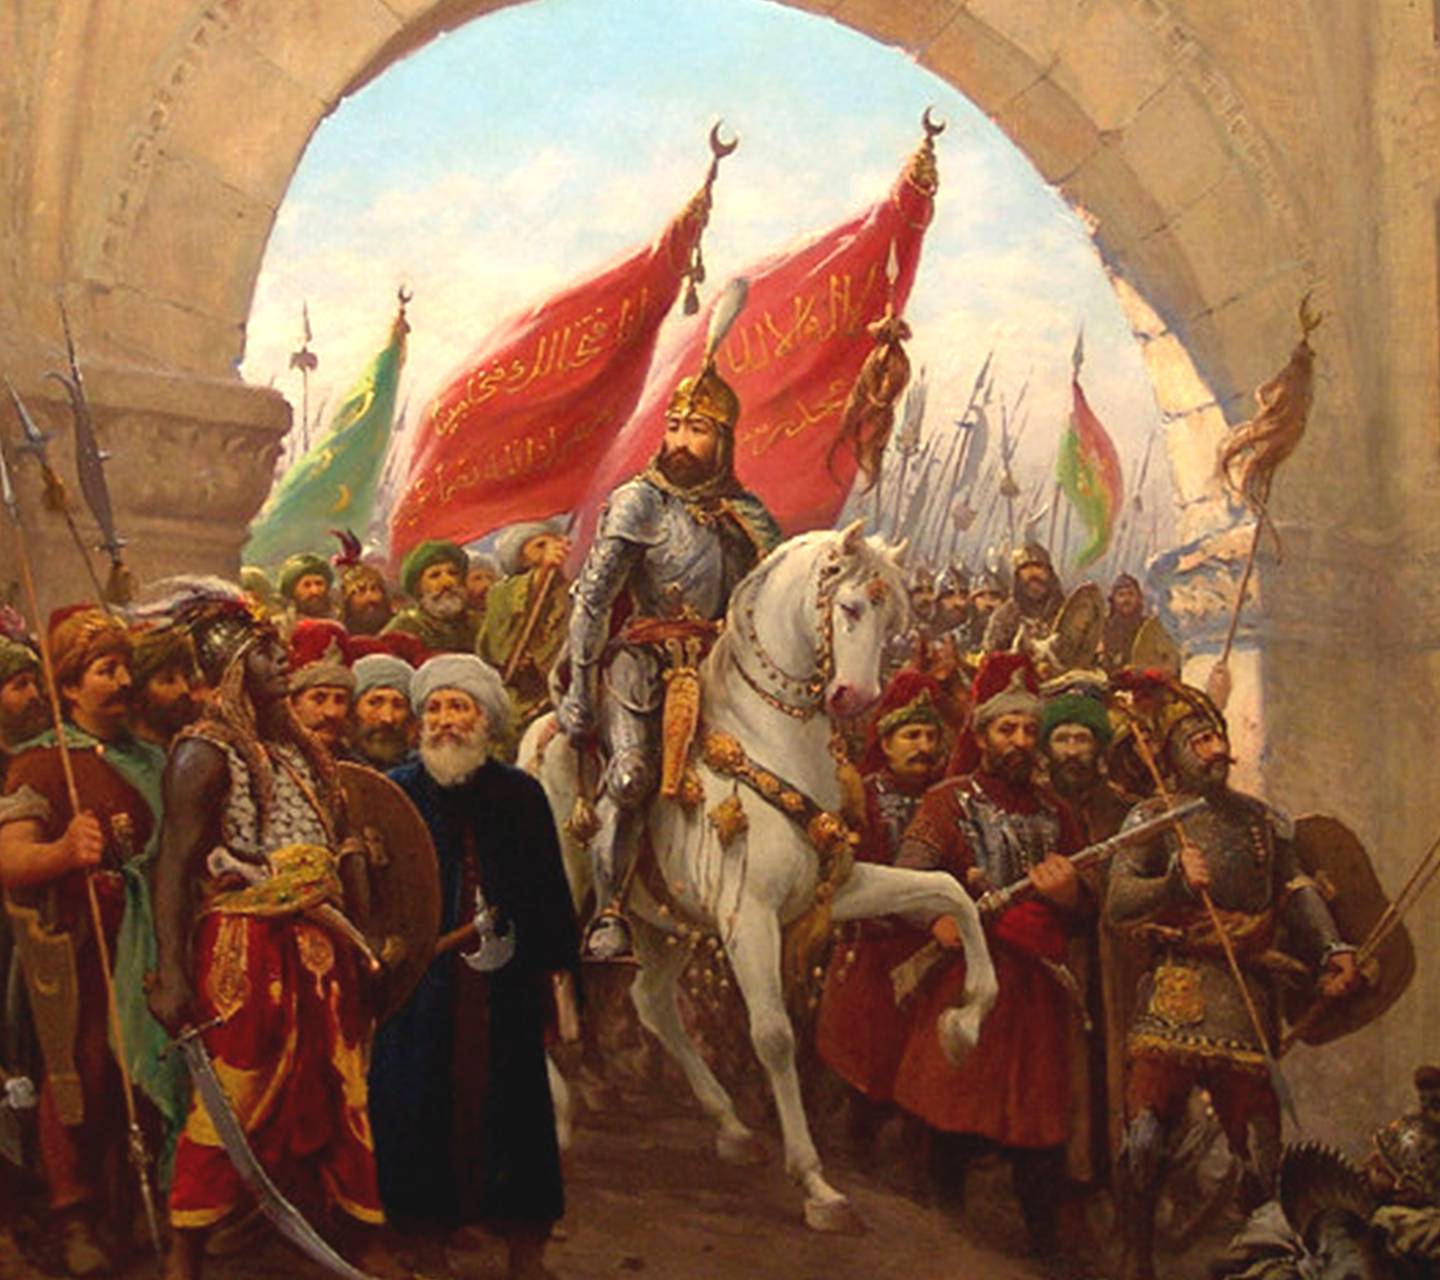 fatih sultan mehmet 바탕 화면,페인트 등,미술,행사,중세,전통